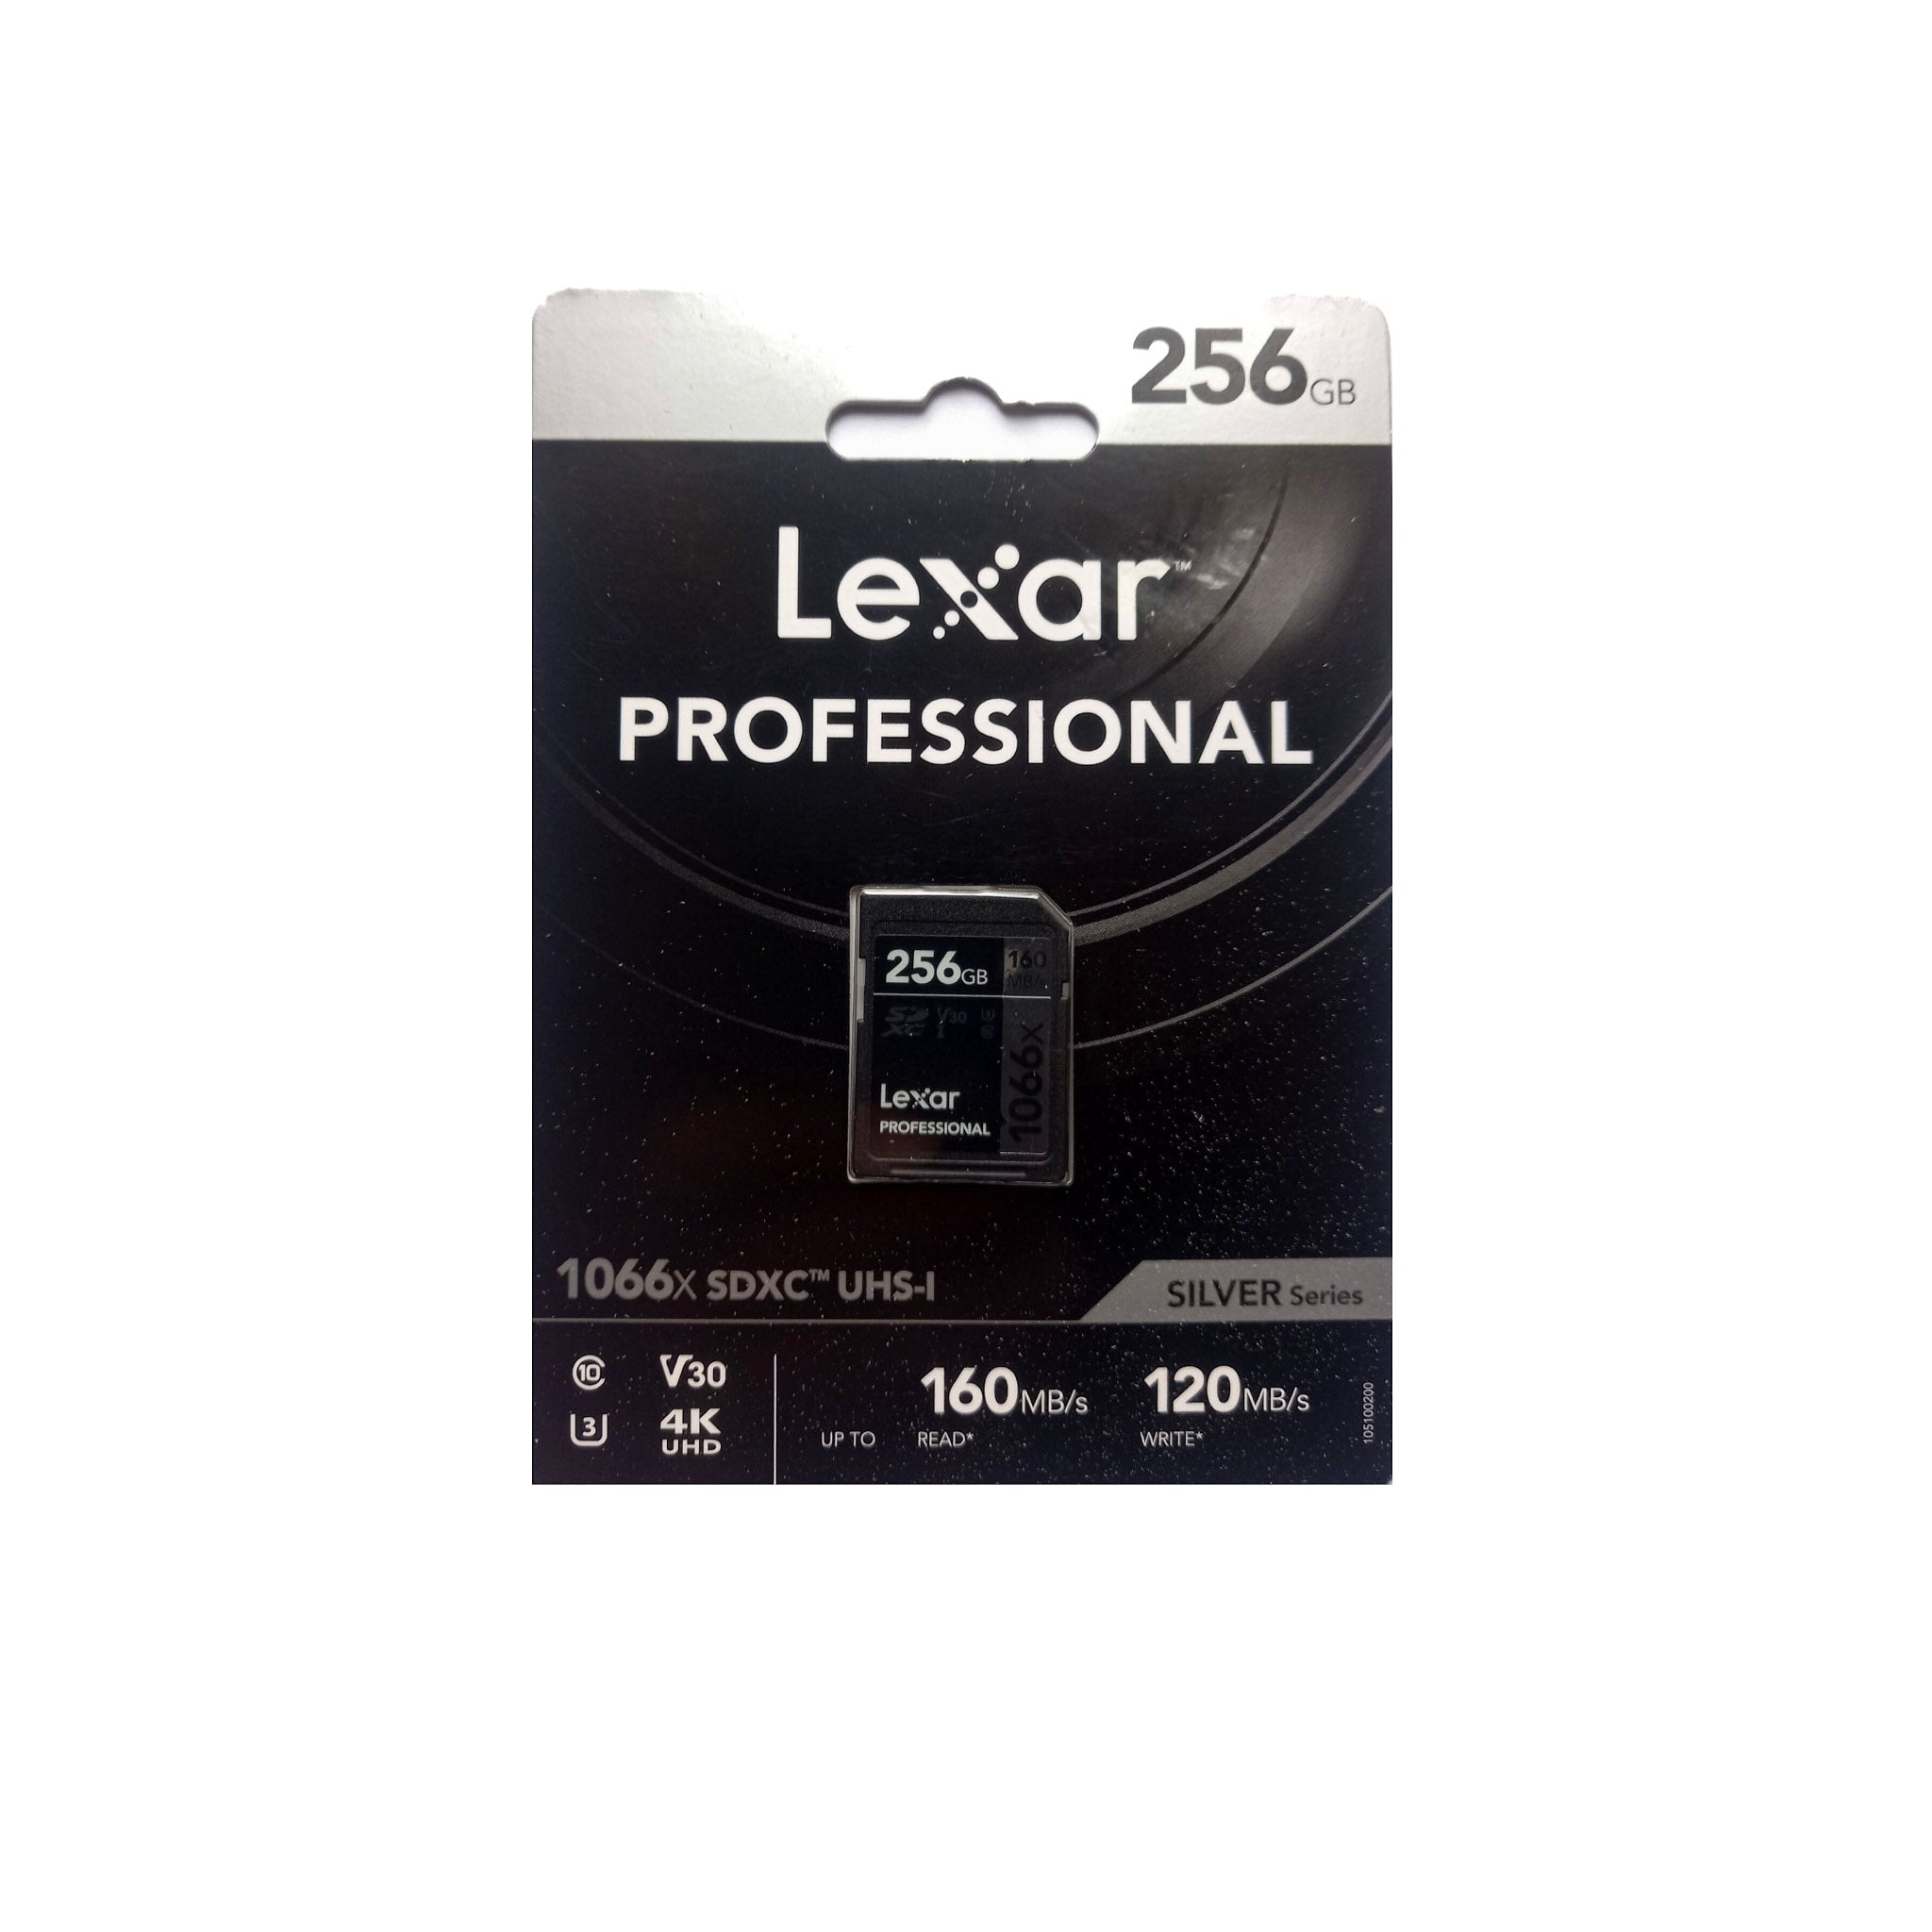 Lexar 256 GB SDXC Card Professional UHS-1 (Silver Series)